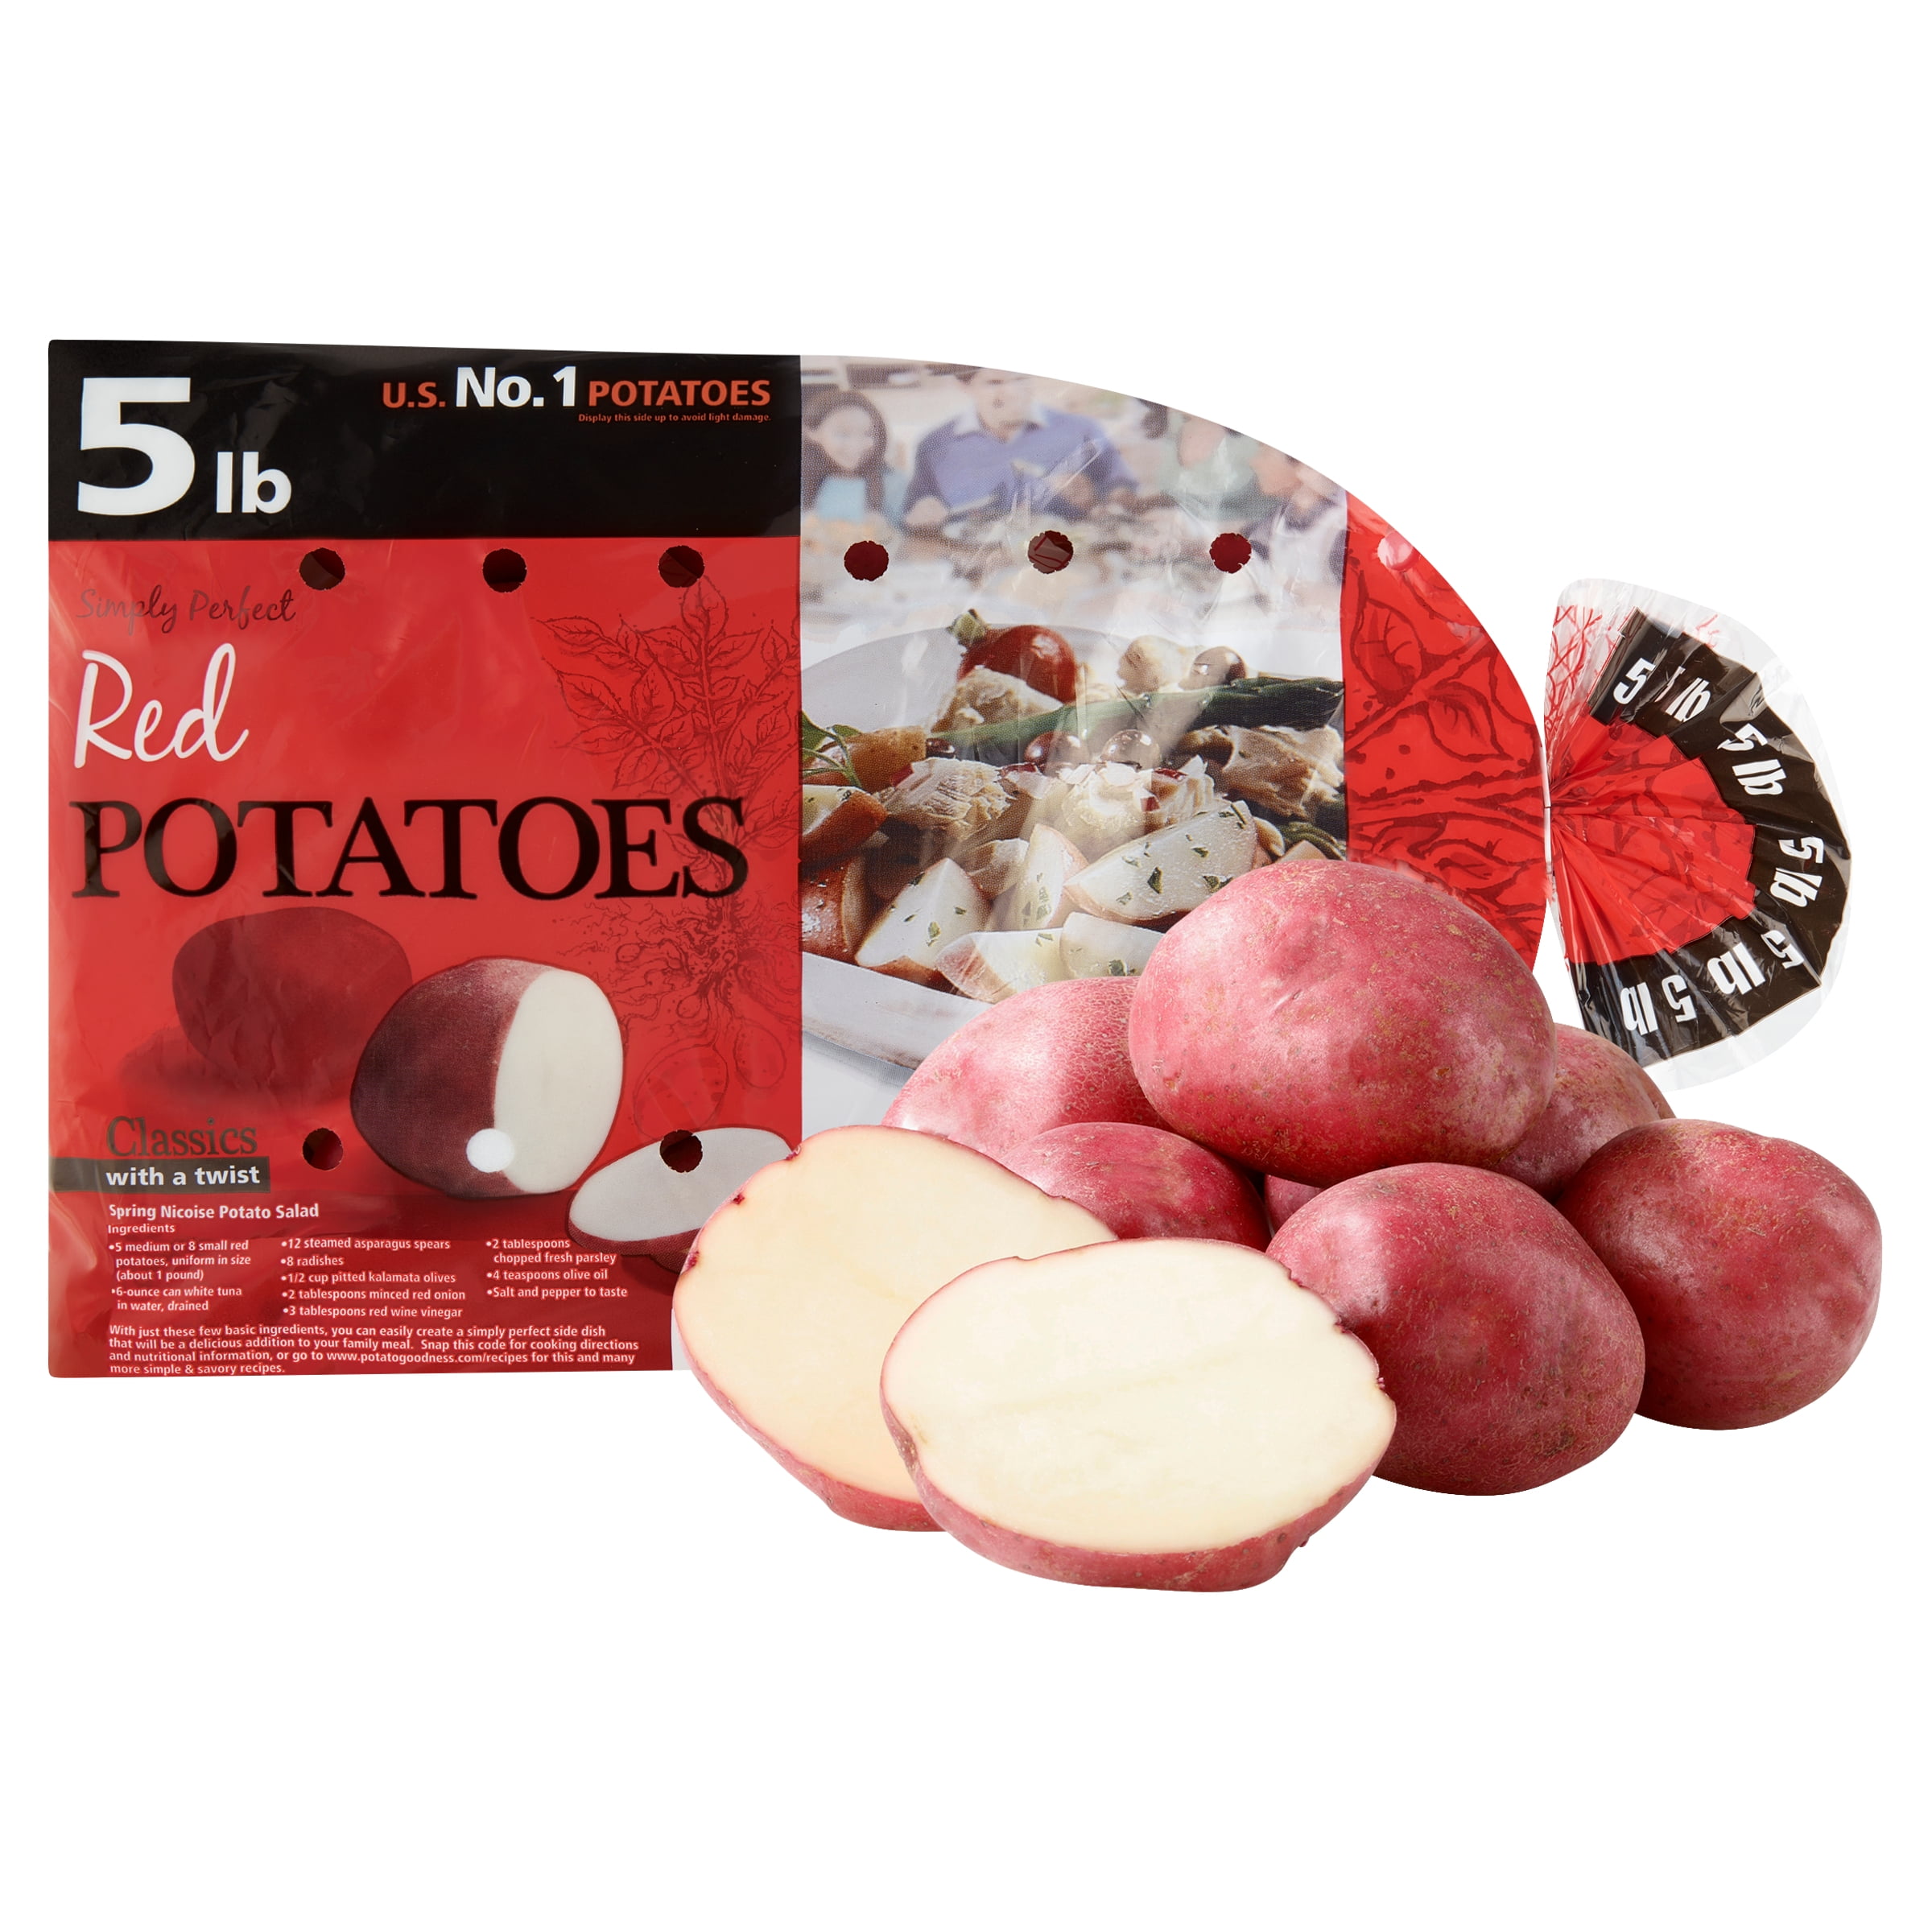 Red Potatoes, 5 lb Bag